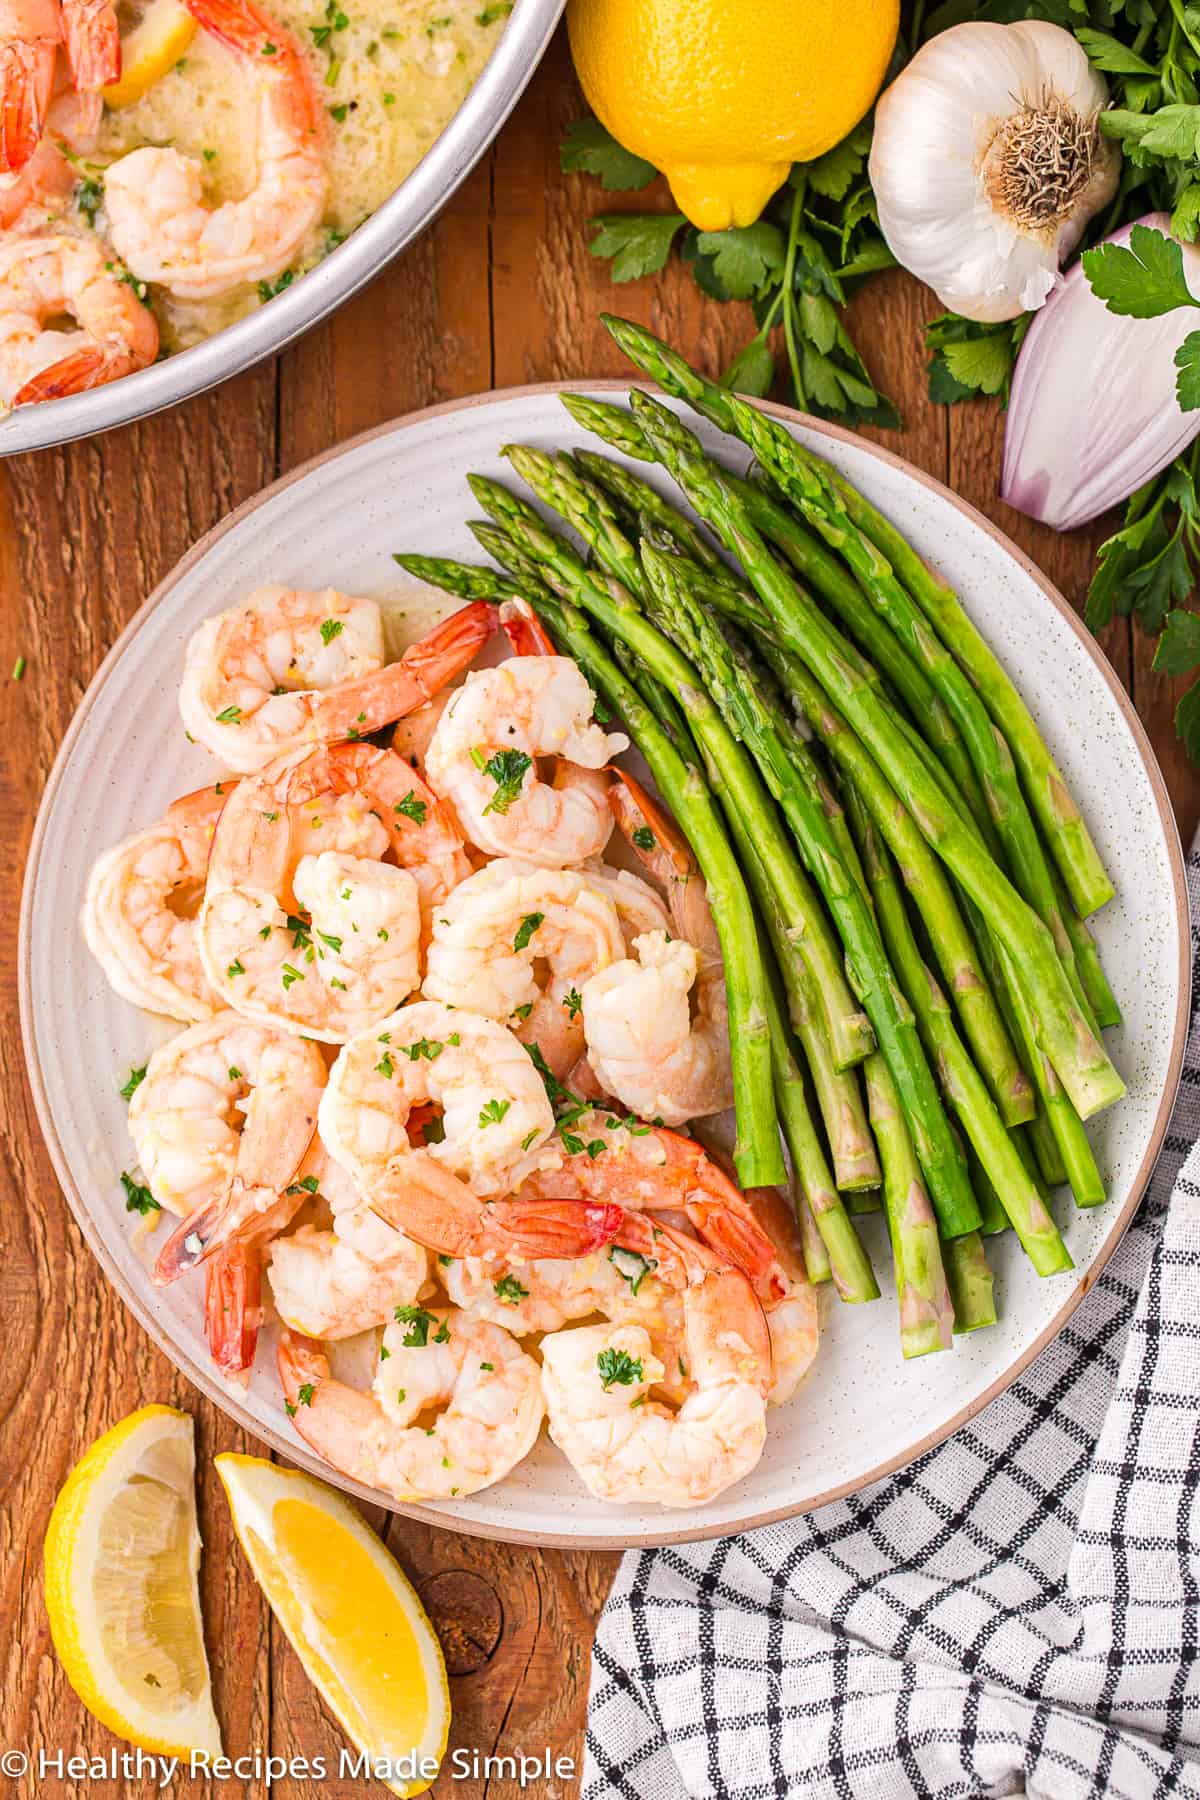 A plate with lemon garlic shrimp and asparagus on it.